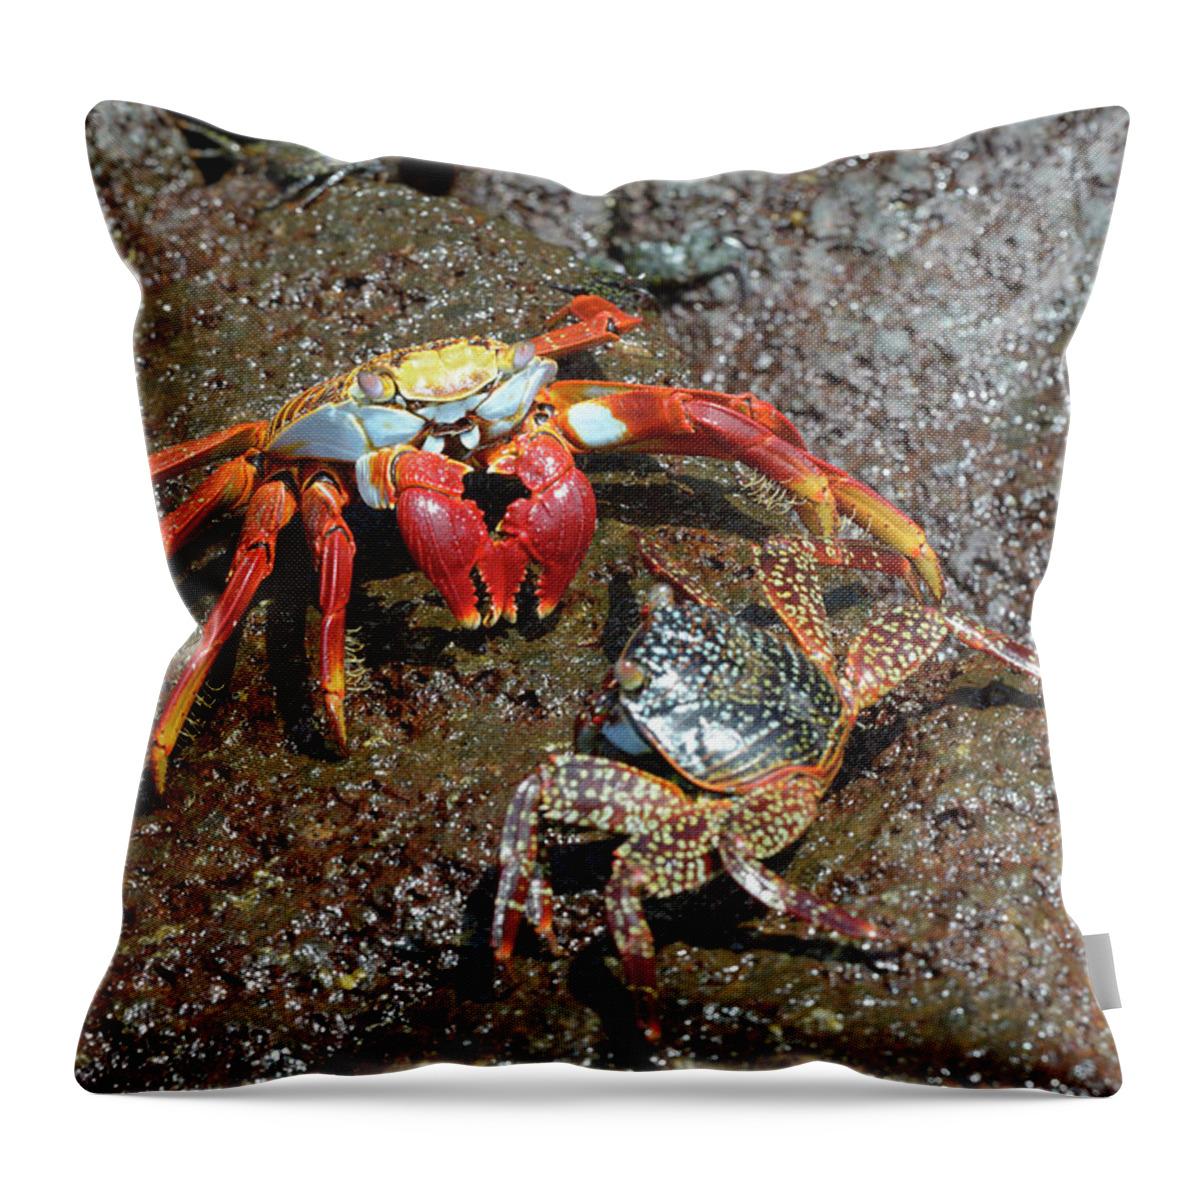 Republic Of Ecuador Throw Pillow featuring the photograph Sally Lightfoot crab, Grapsus grapsus, Floreana Island, Galapagos Islands, Ecuador by Kevin Oke